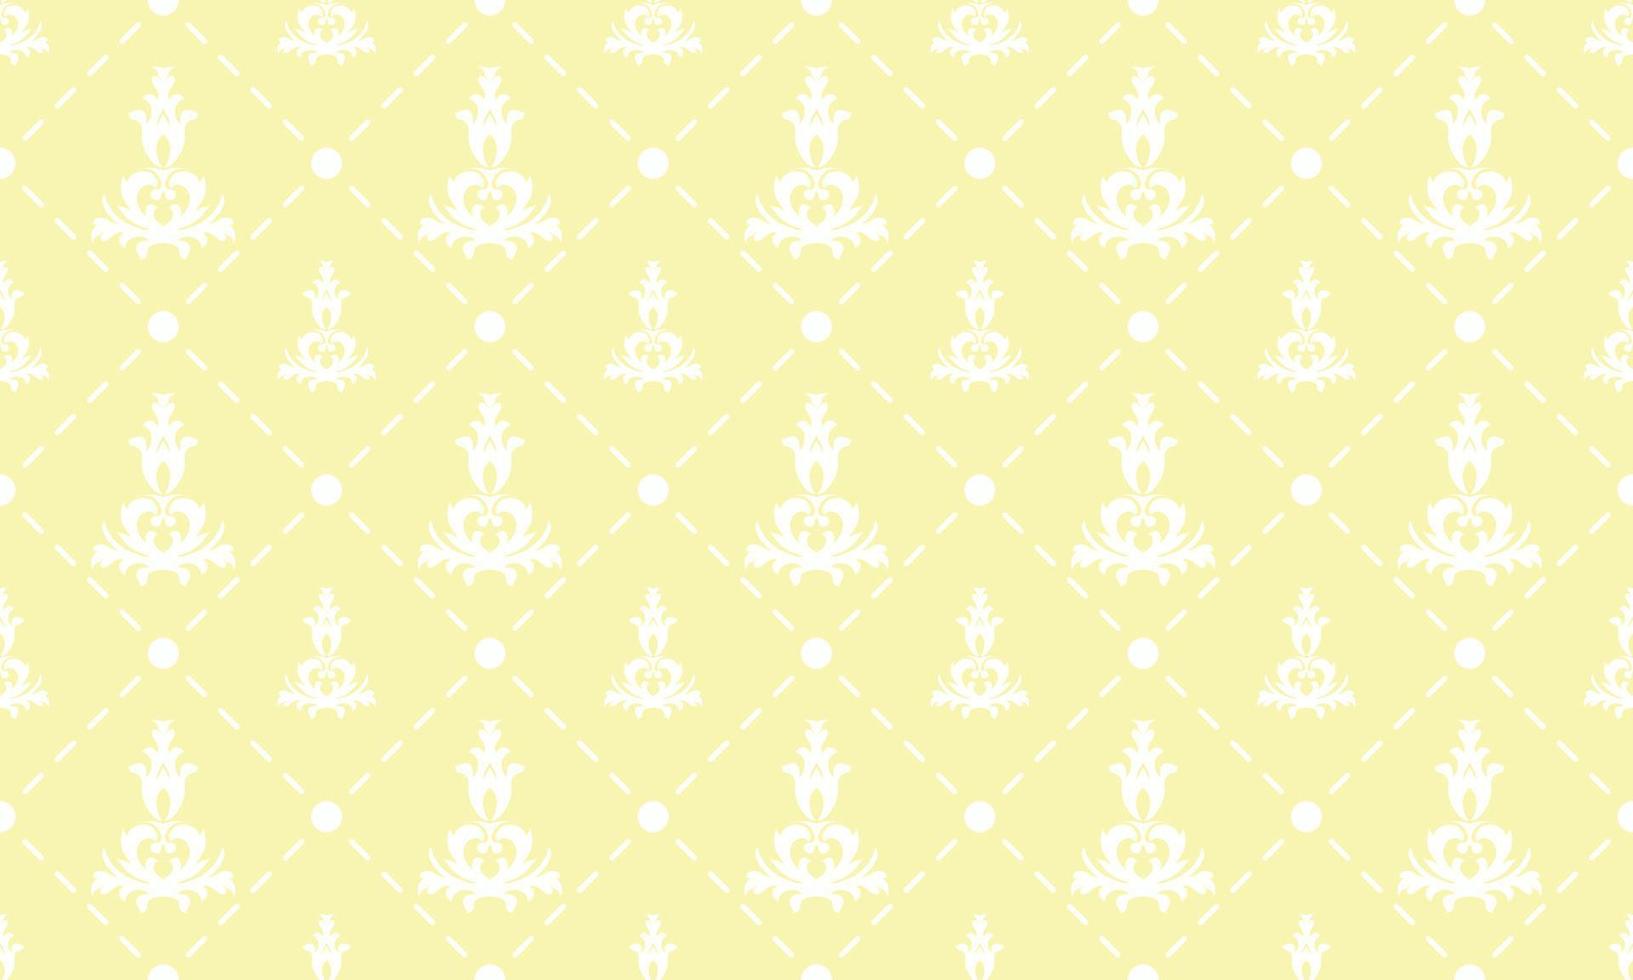 Damask Fleur de Lis pattern meaning vector seamless background wallpaper Fleur de Lis pattern Scandinavian batik Digital texture Design for print printable fabric saree border.